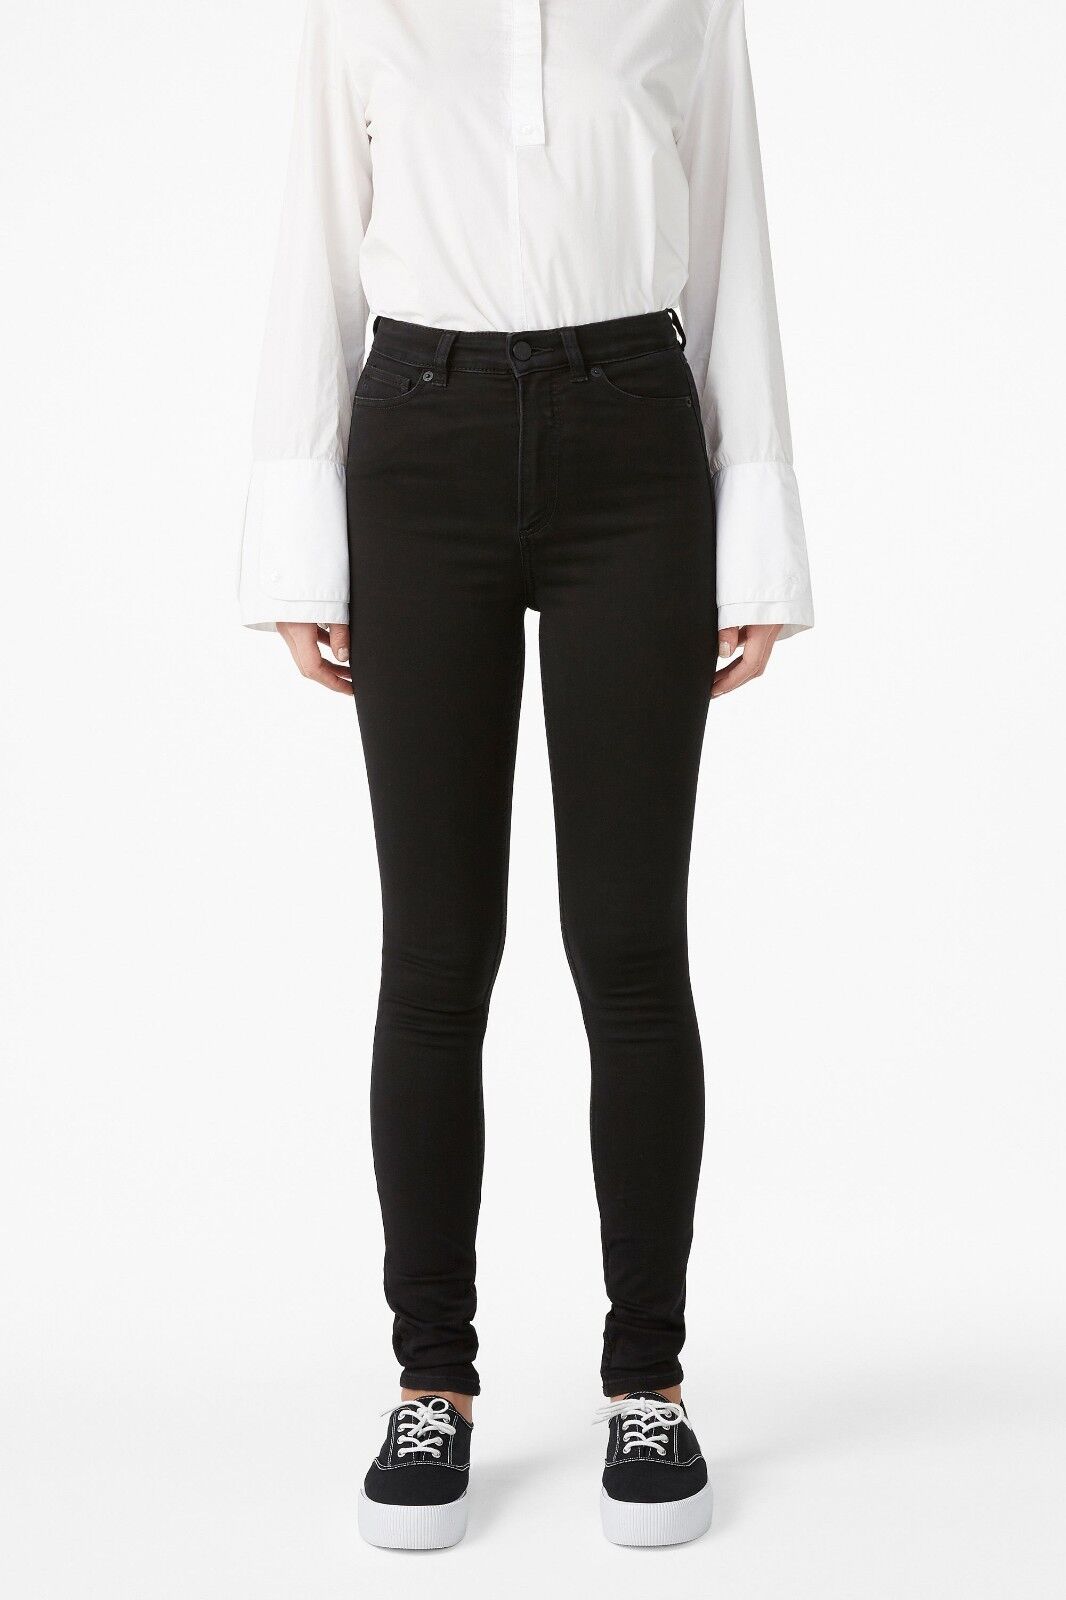 insect Uitgang Beschikbaar Brand New Women Ladies Monki Oki Slim/Skinny High Waist Black jeans All  Sizes. | eBay